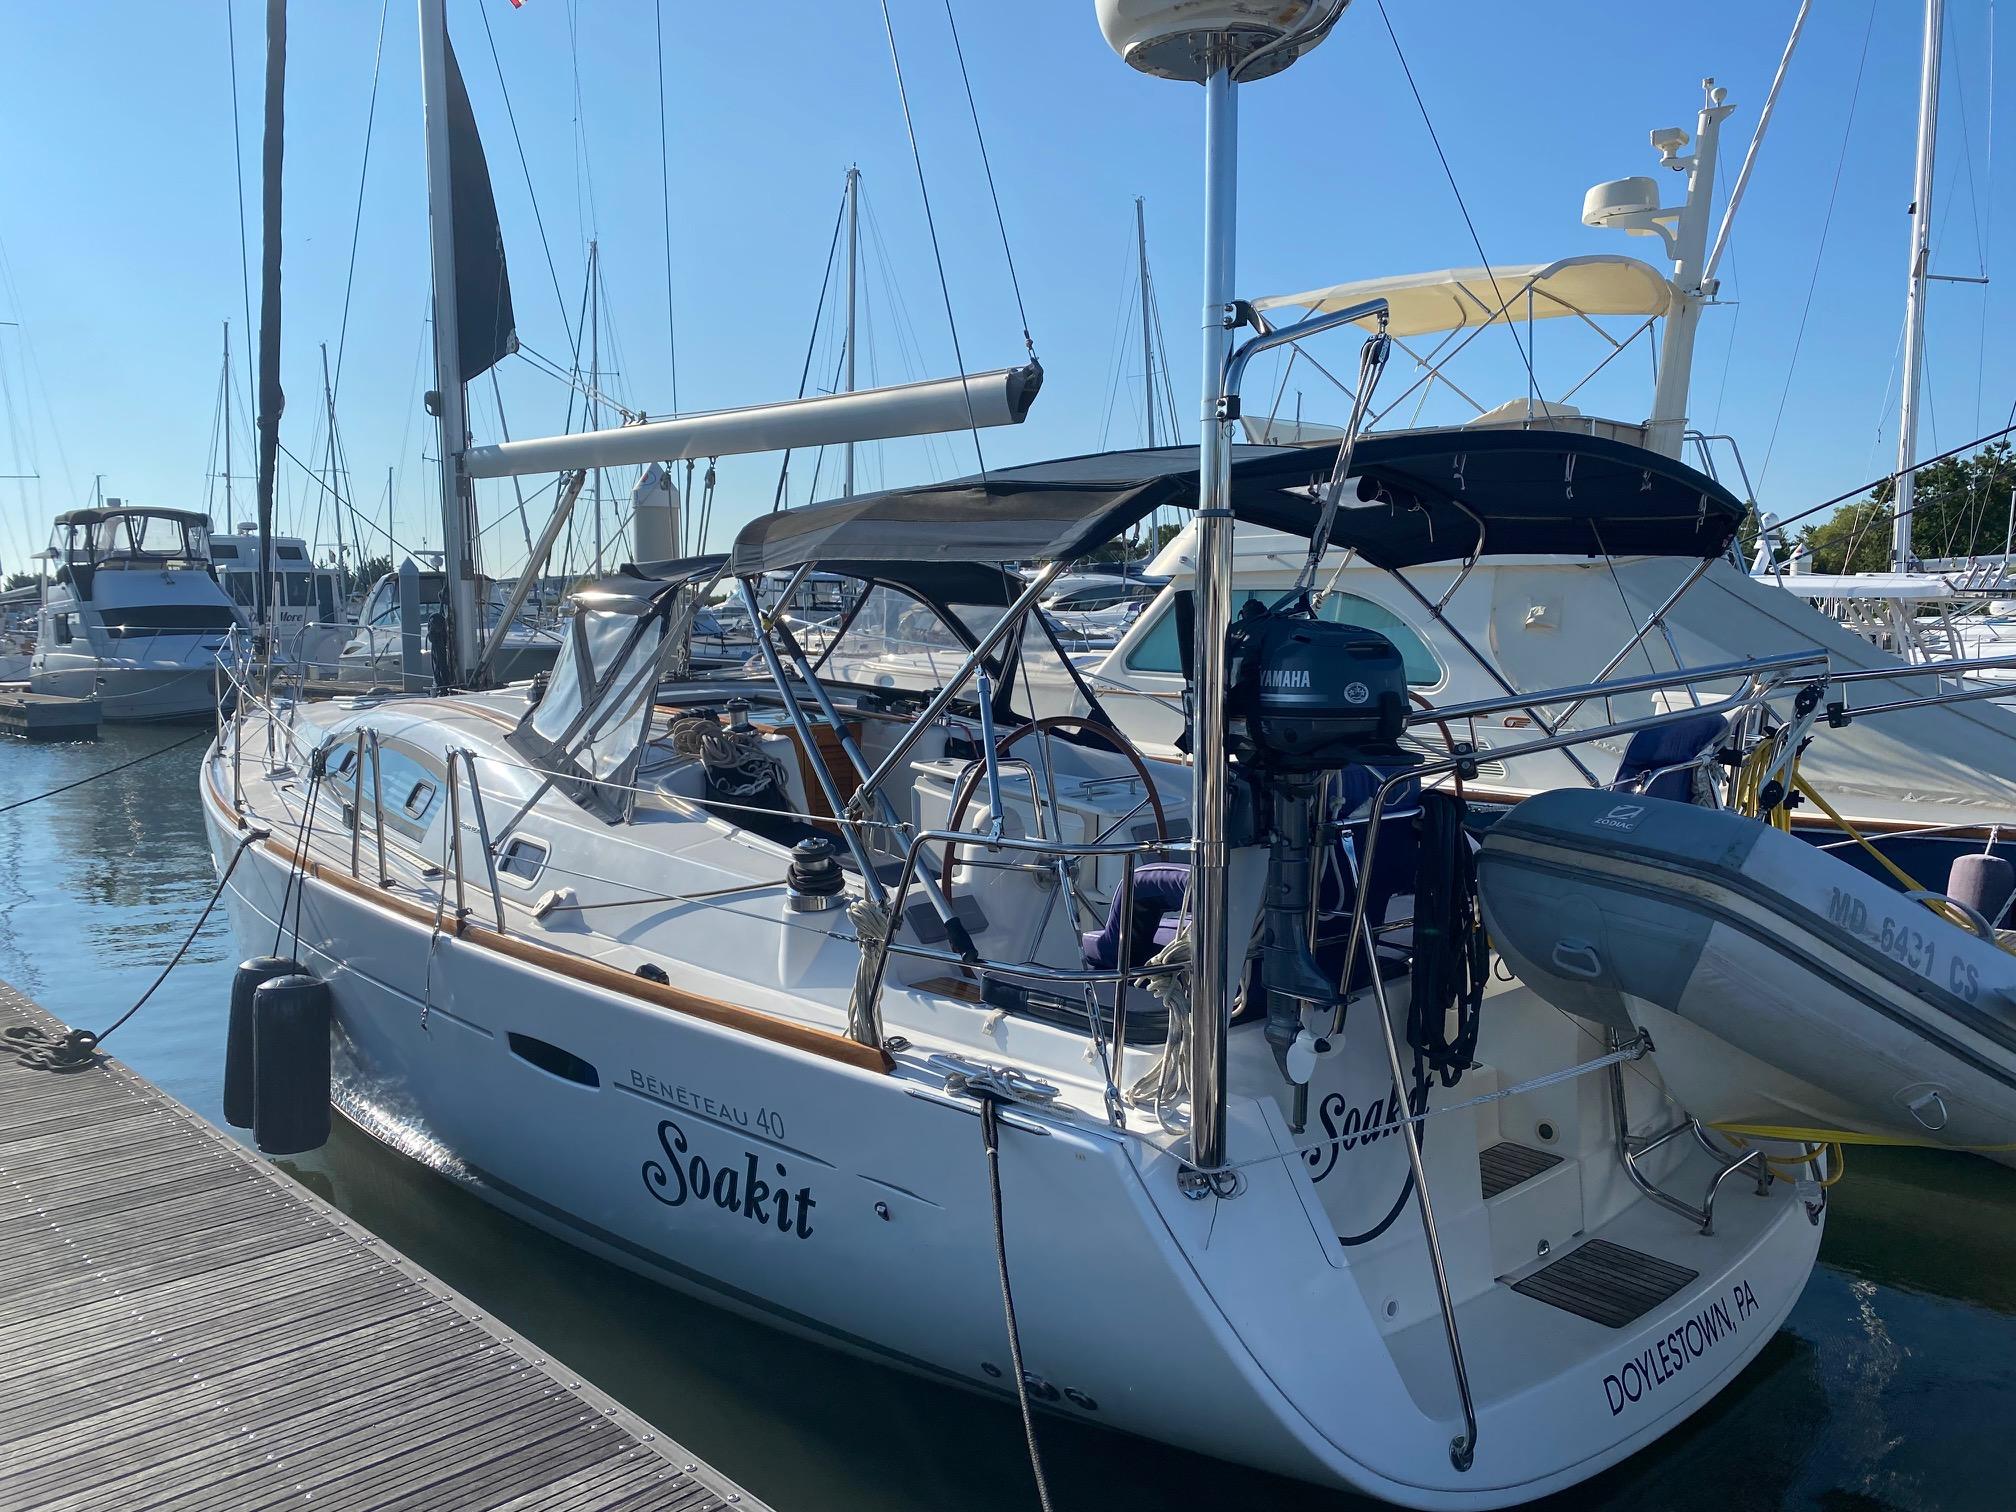 Soakit Yacht Brokers of Annapolis